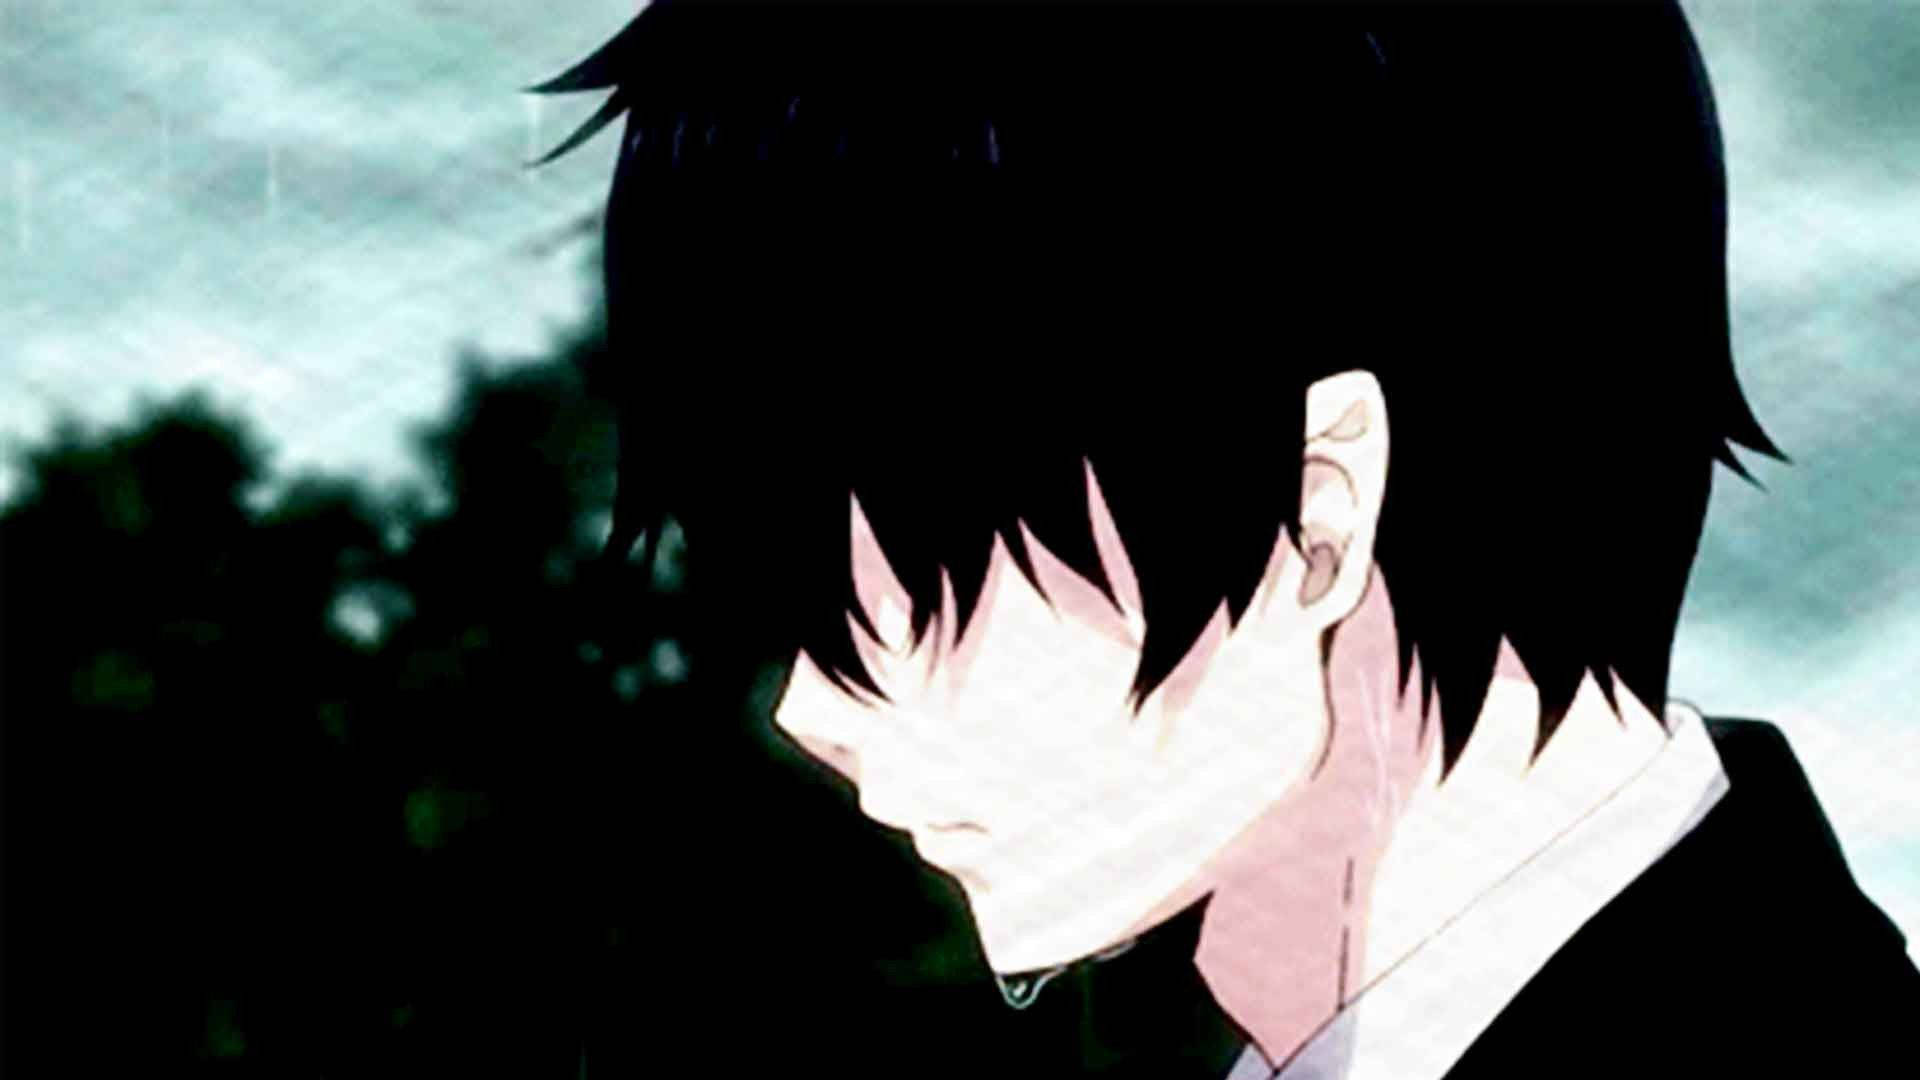 Alone Sad Anime Boys With Tears Background